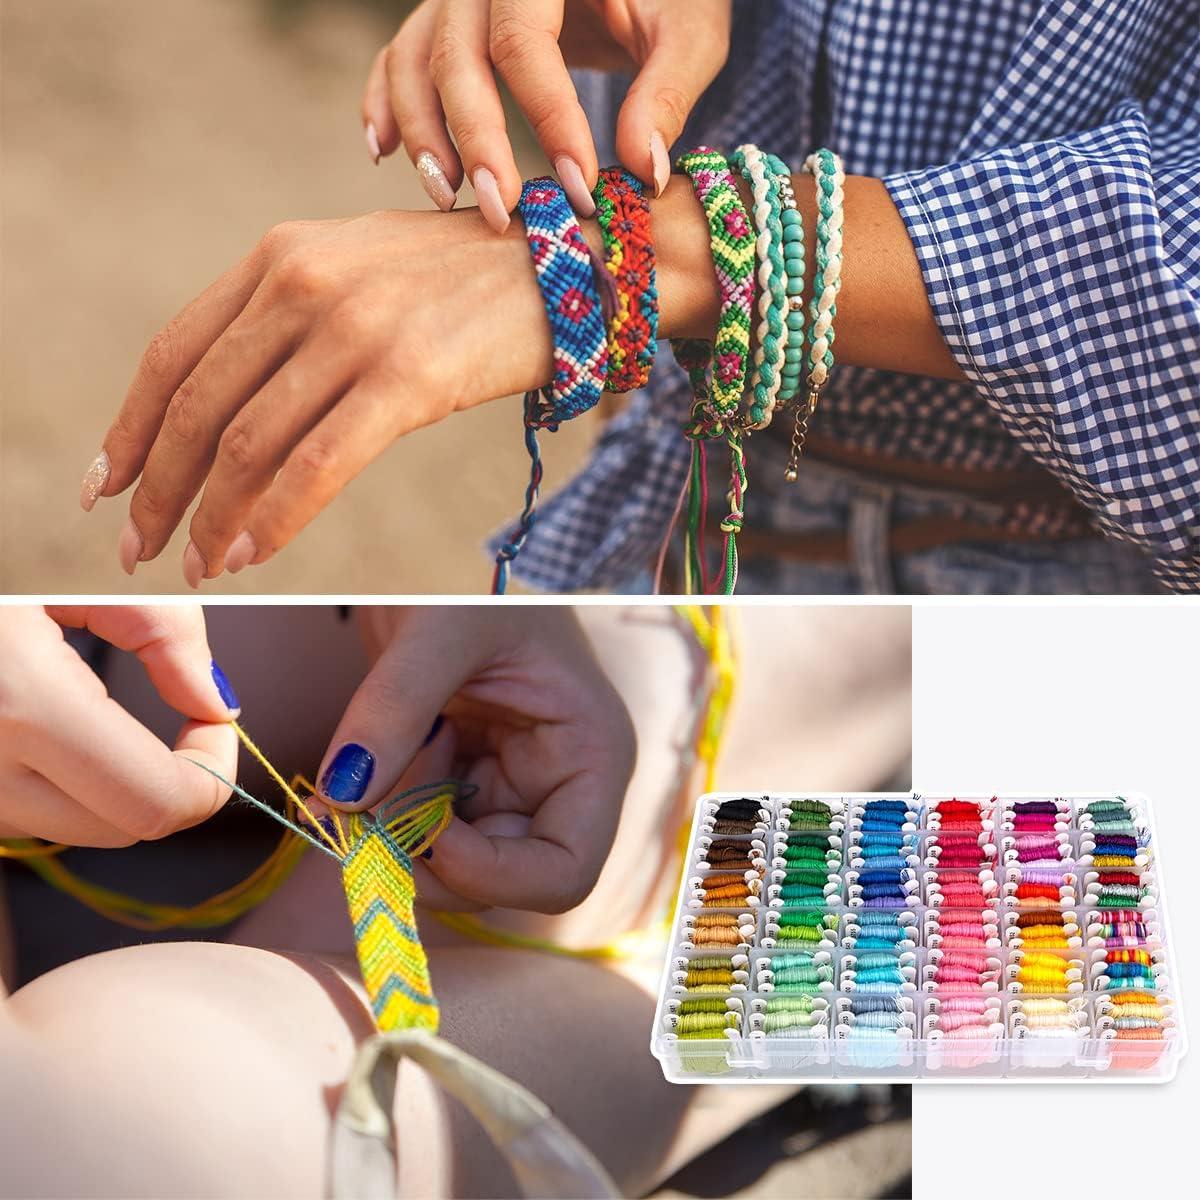 218pcs+ Embroidery Floss Cross Stitch Threads,Bracelet String Kit with  Organizer Storage Box-Included 110pcs Friendship Bracelet Craft  Floss,100pcs